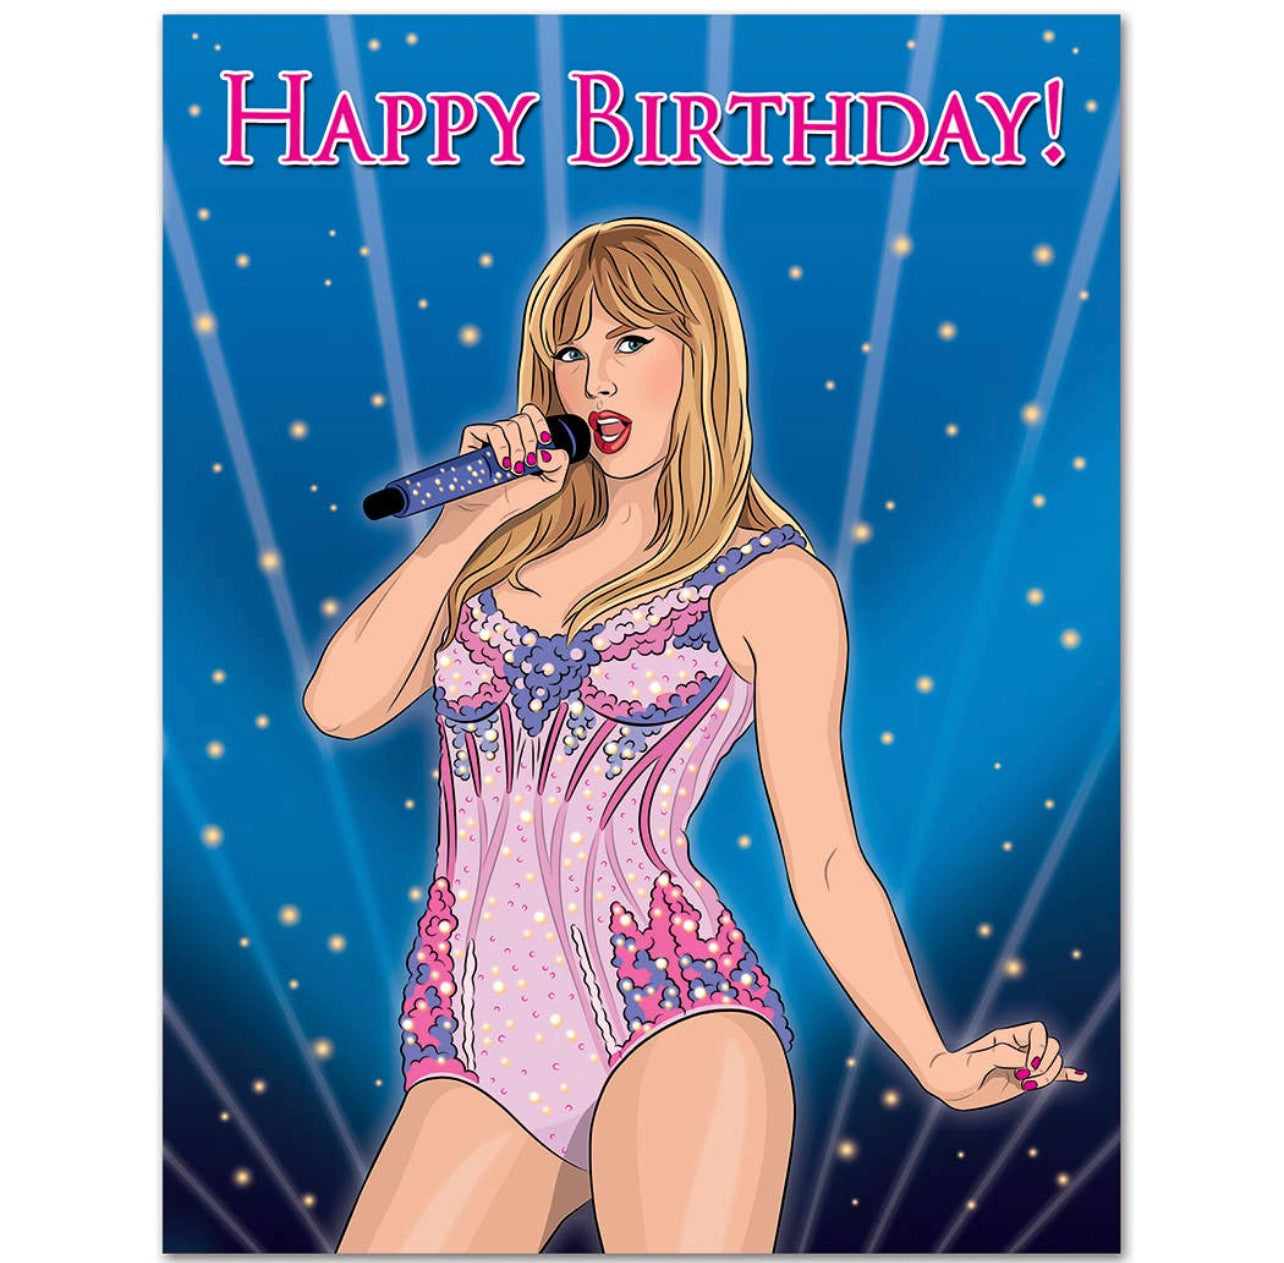 Happy Birthday! Taylor Swift